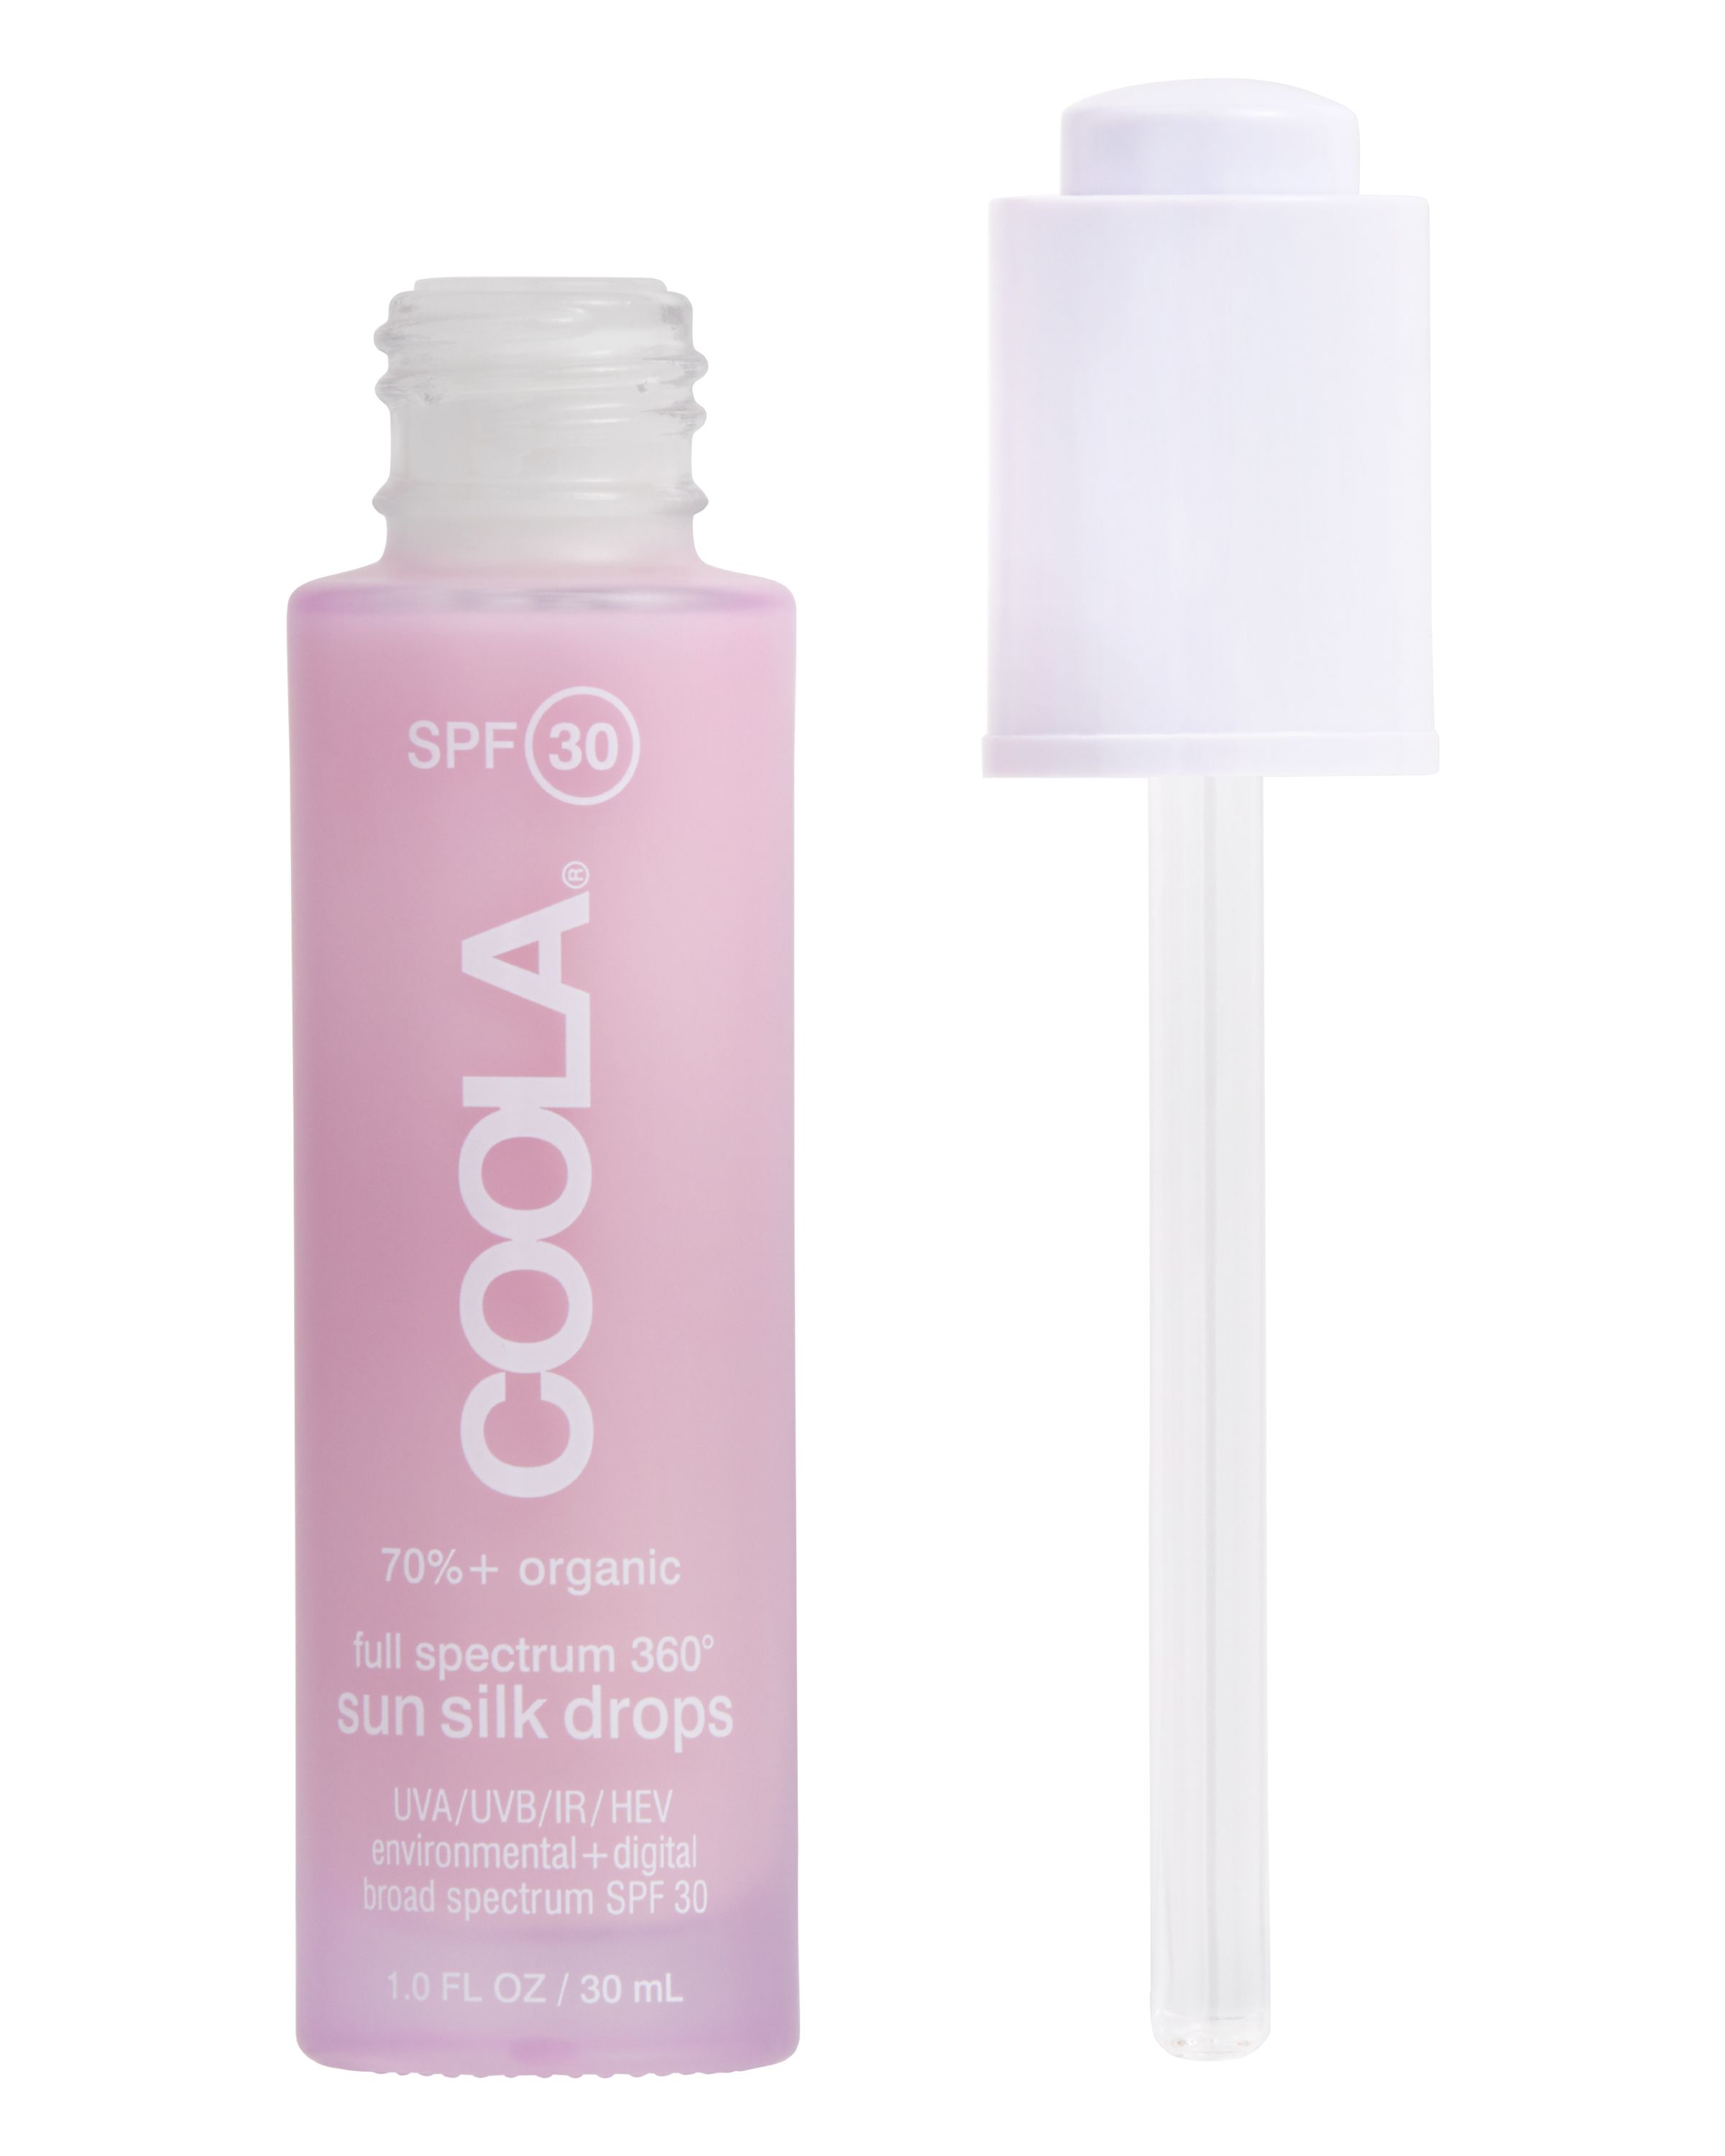 DISCCOOLA Full Spectrum 360° Sun Silk Drops Organic Face Sunscreen, SPF 30 -  1 fl oz